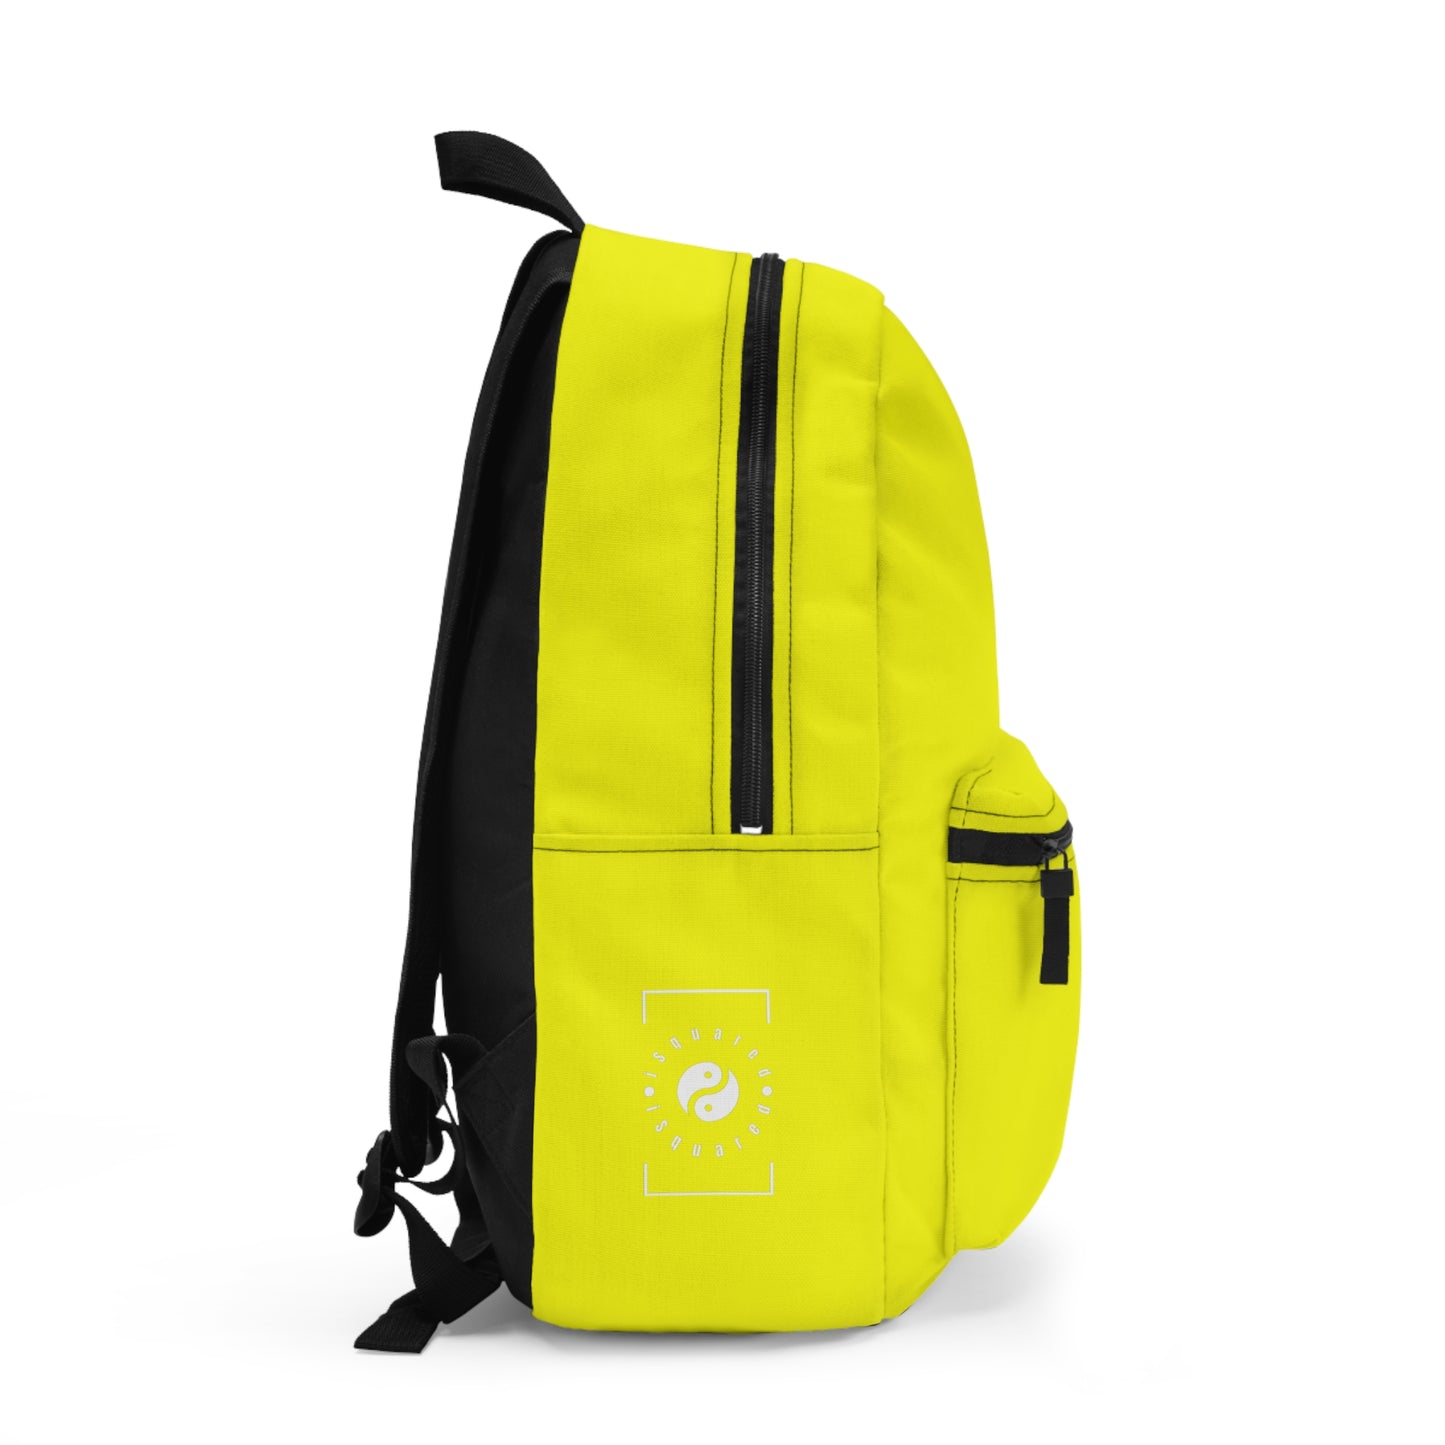 Neon Yellow FFFF00 - Backpack